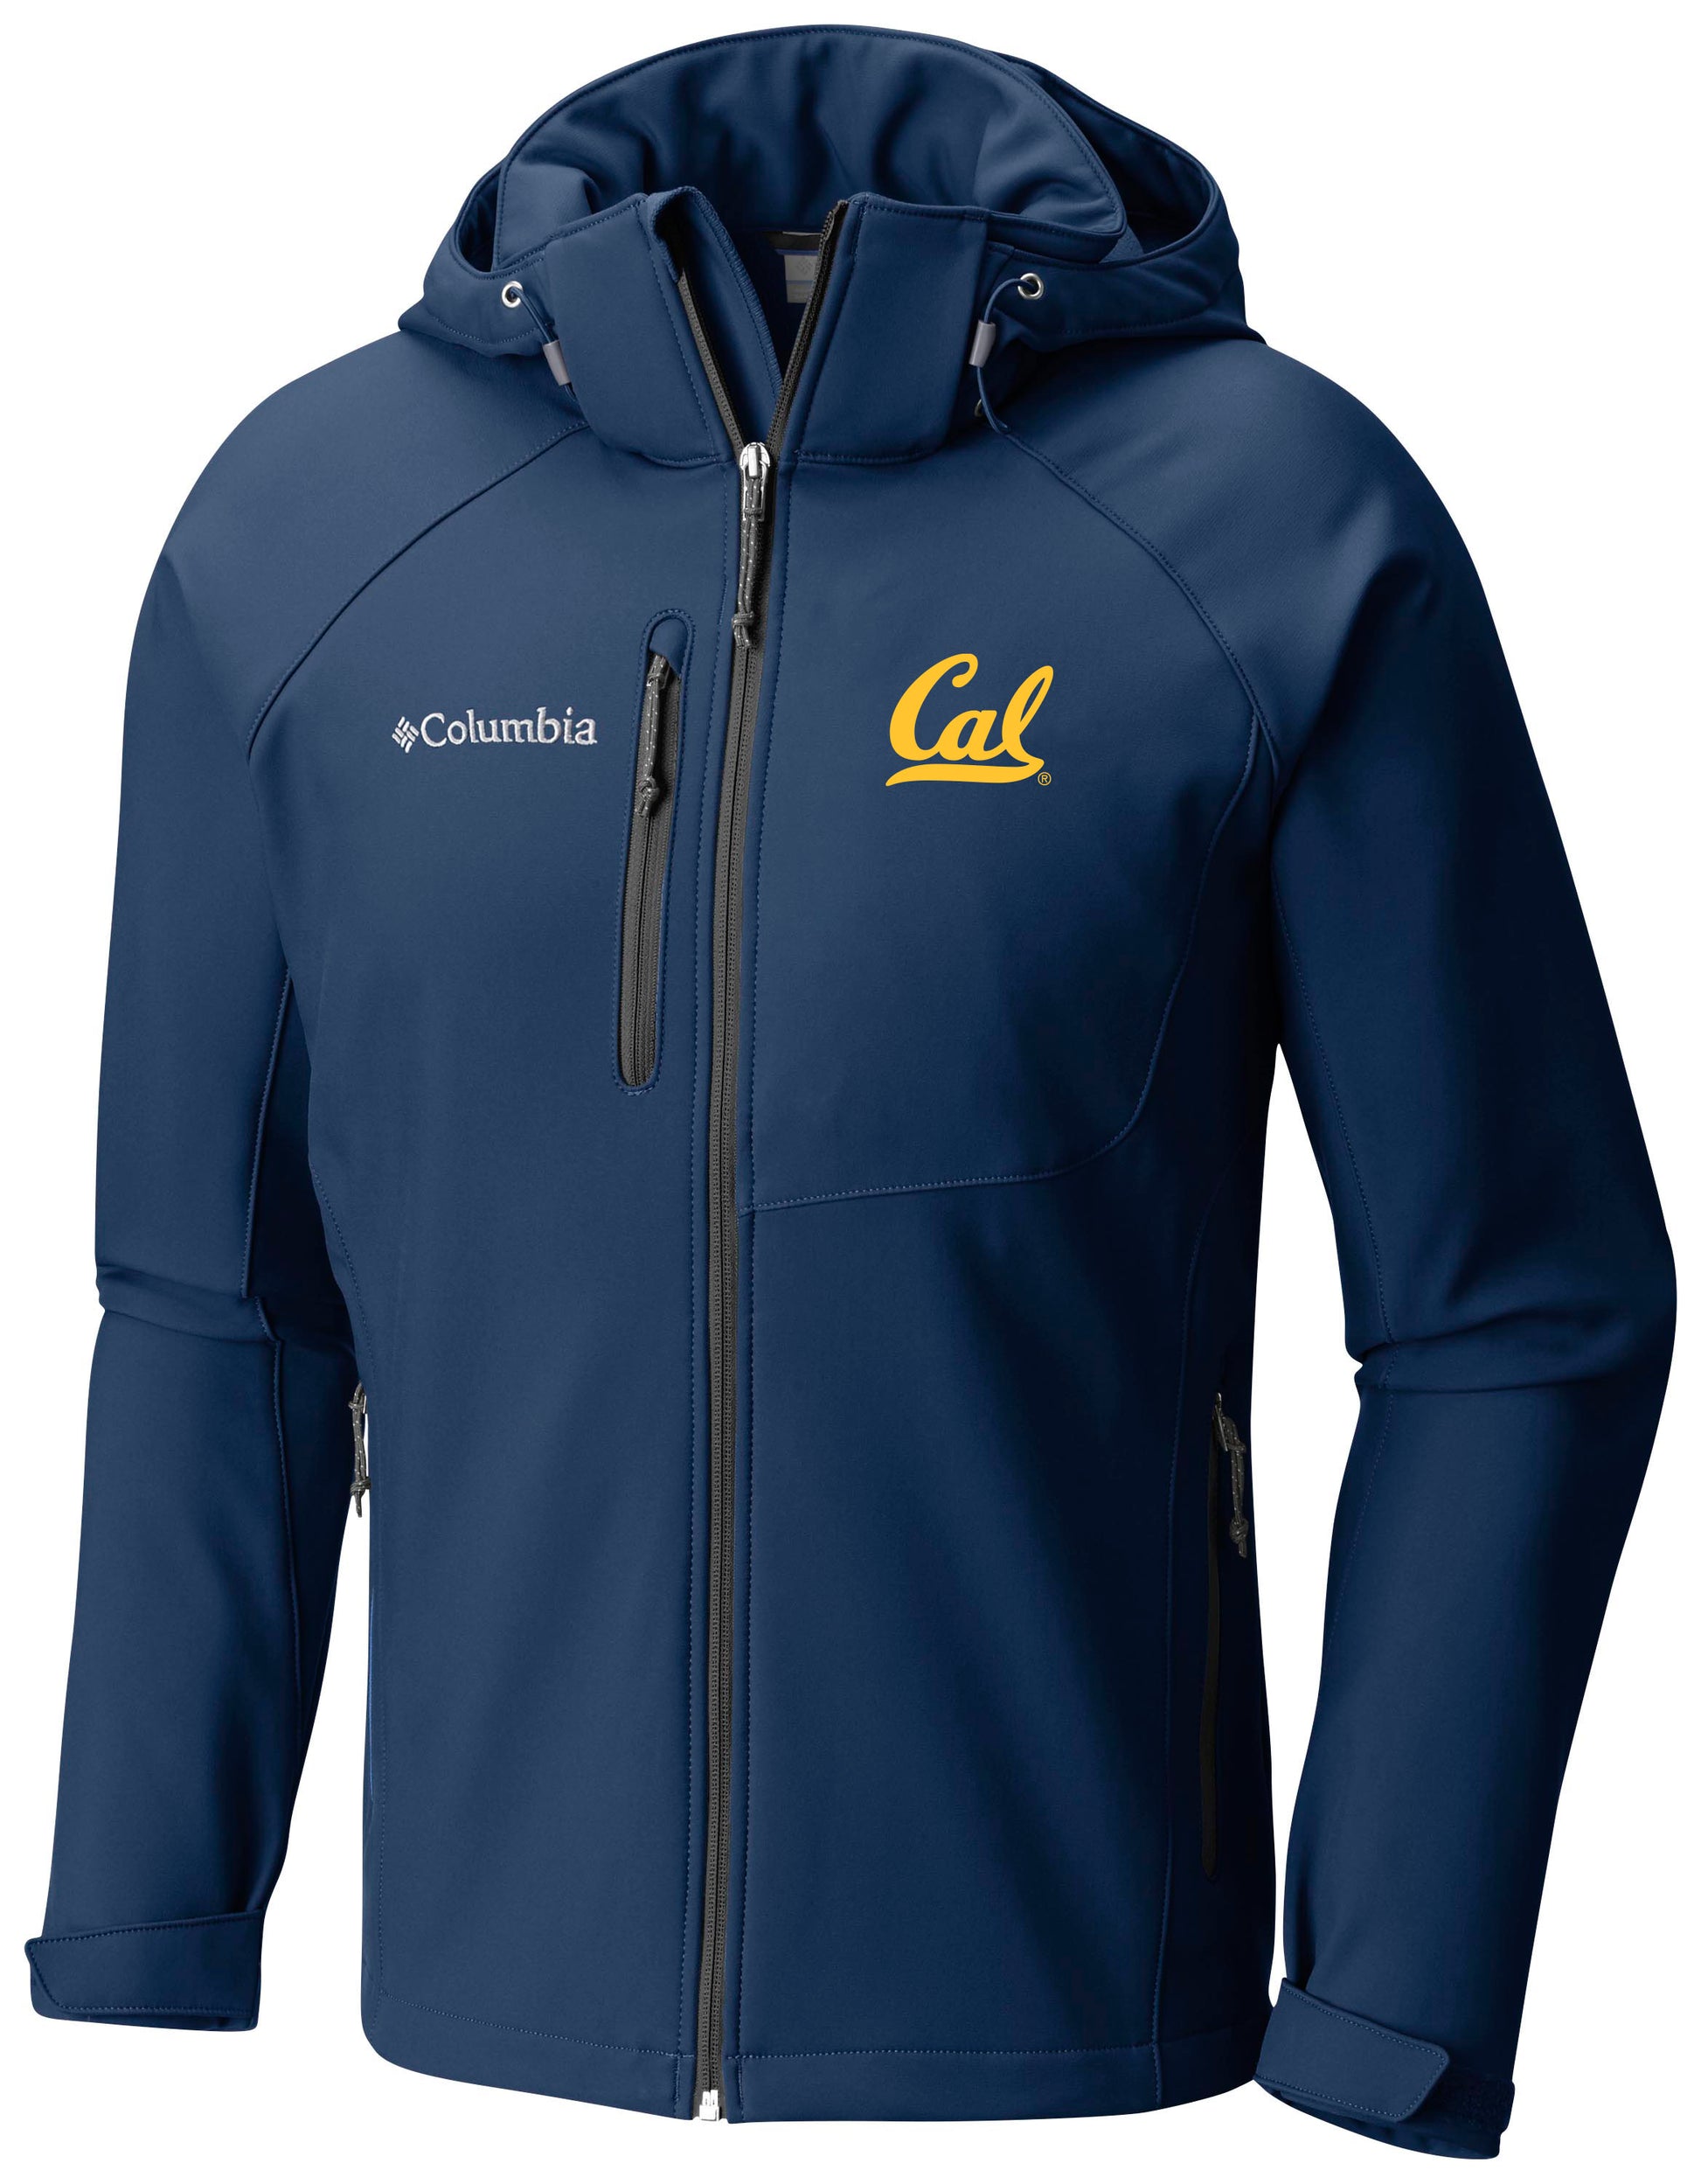 U.C. Berkeley Cal embroidered hooded softshell jacket-Navy-Shop College Wear